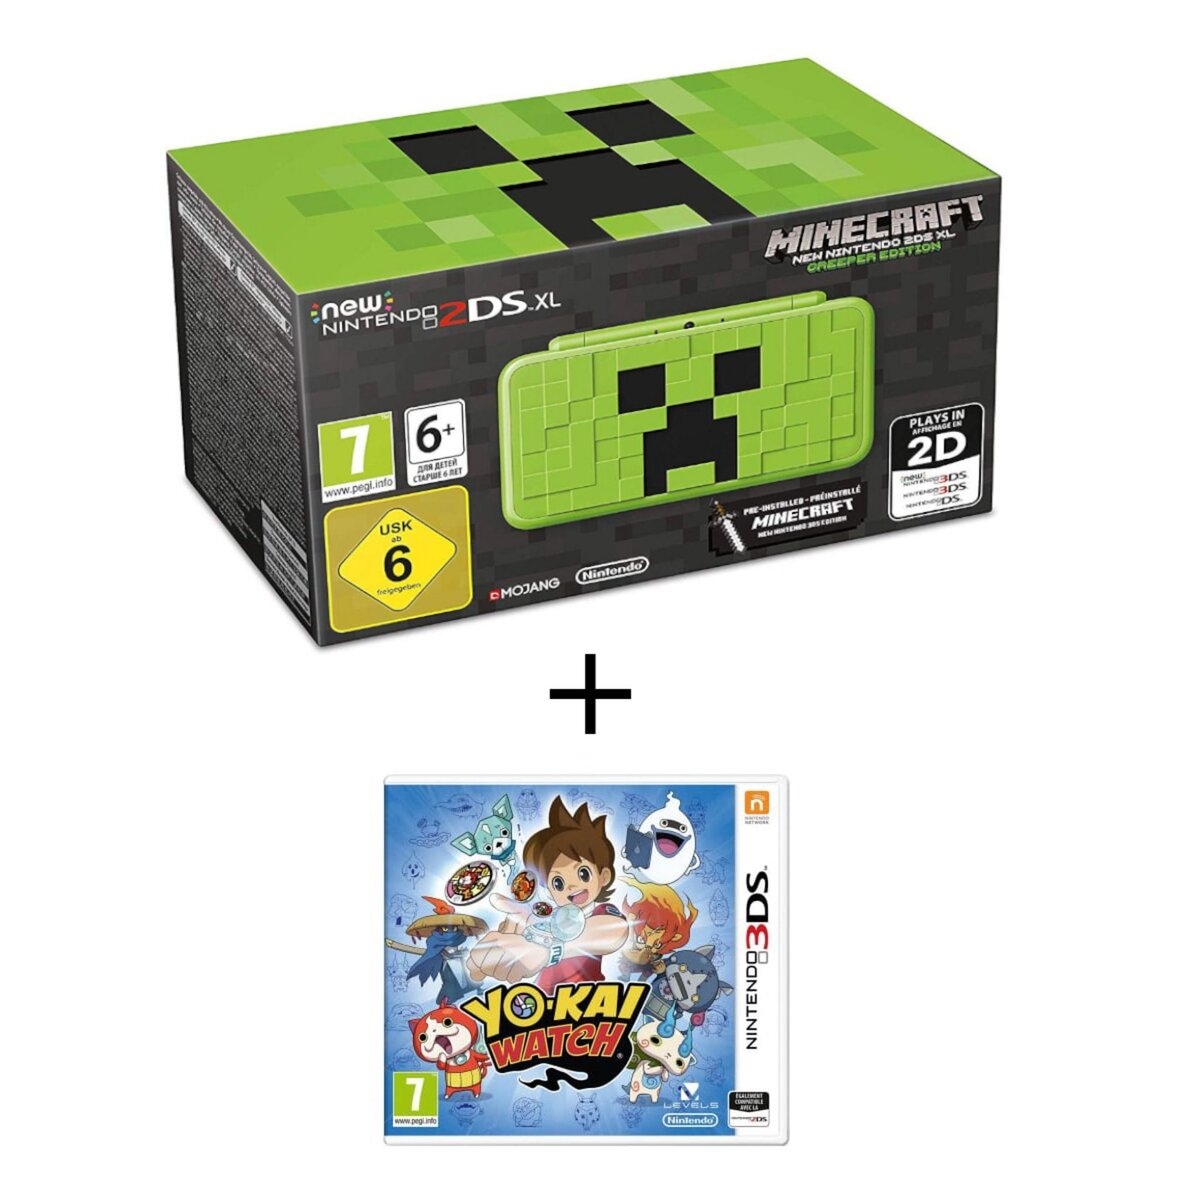 Console New 2DS XL Minecraft - Creeper Édition + Yo-Kai Watch 3DS